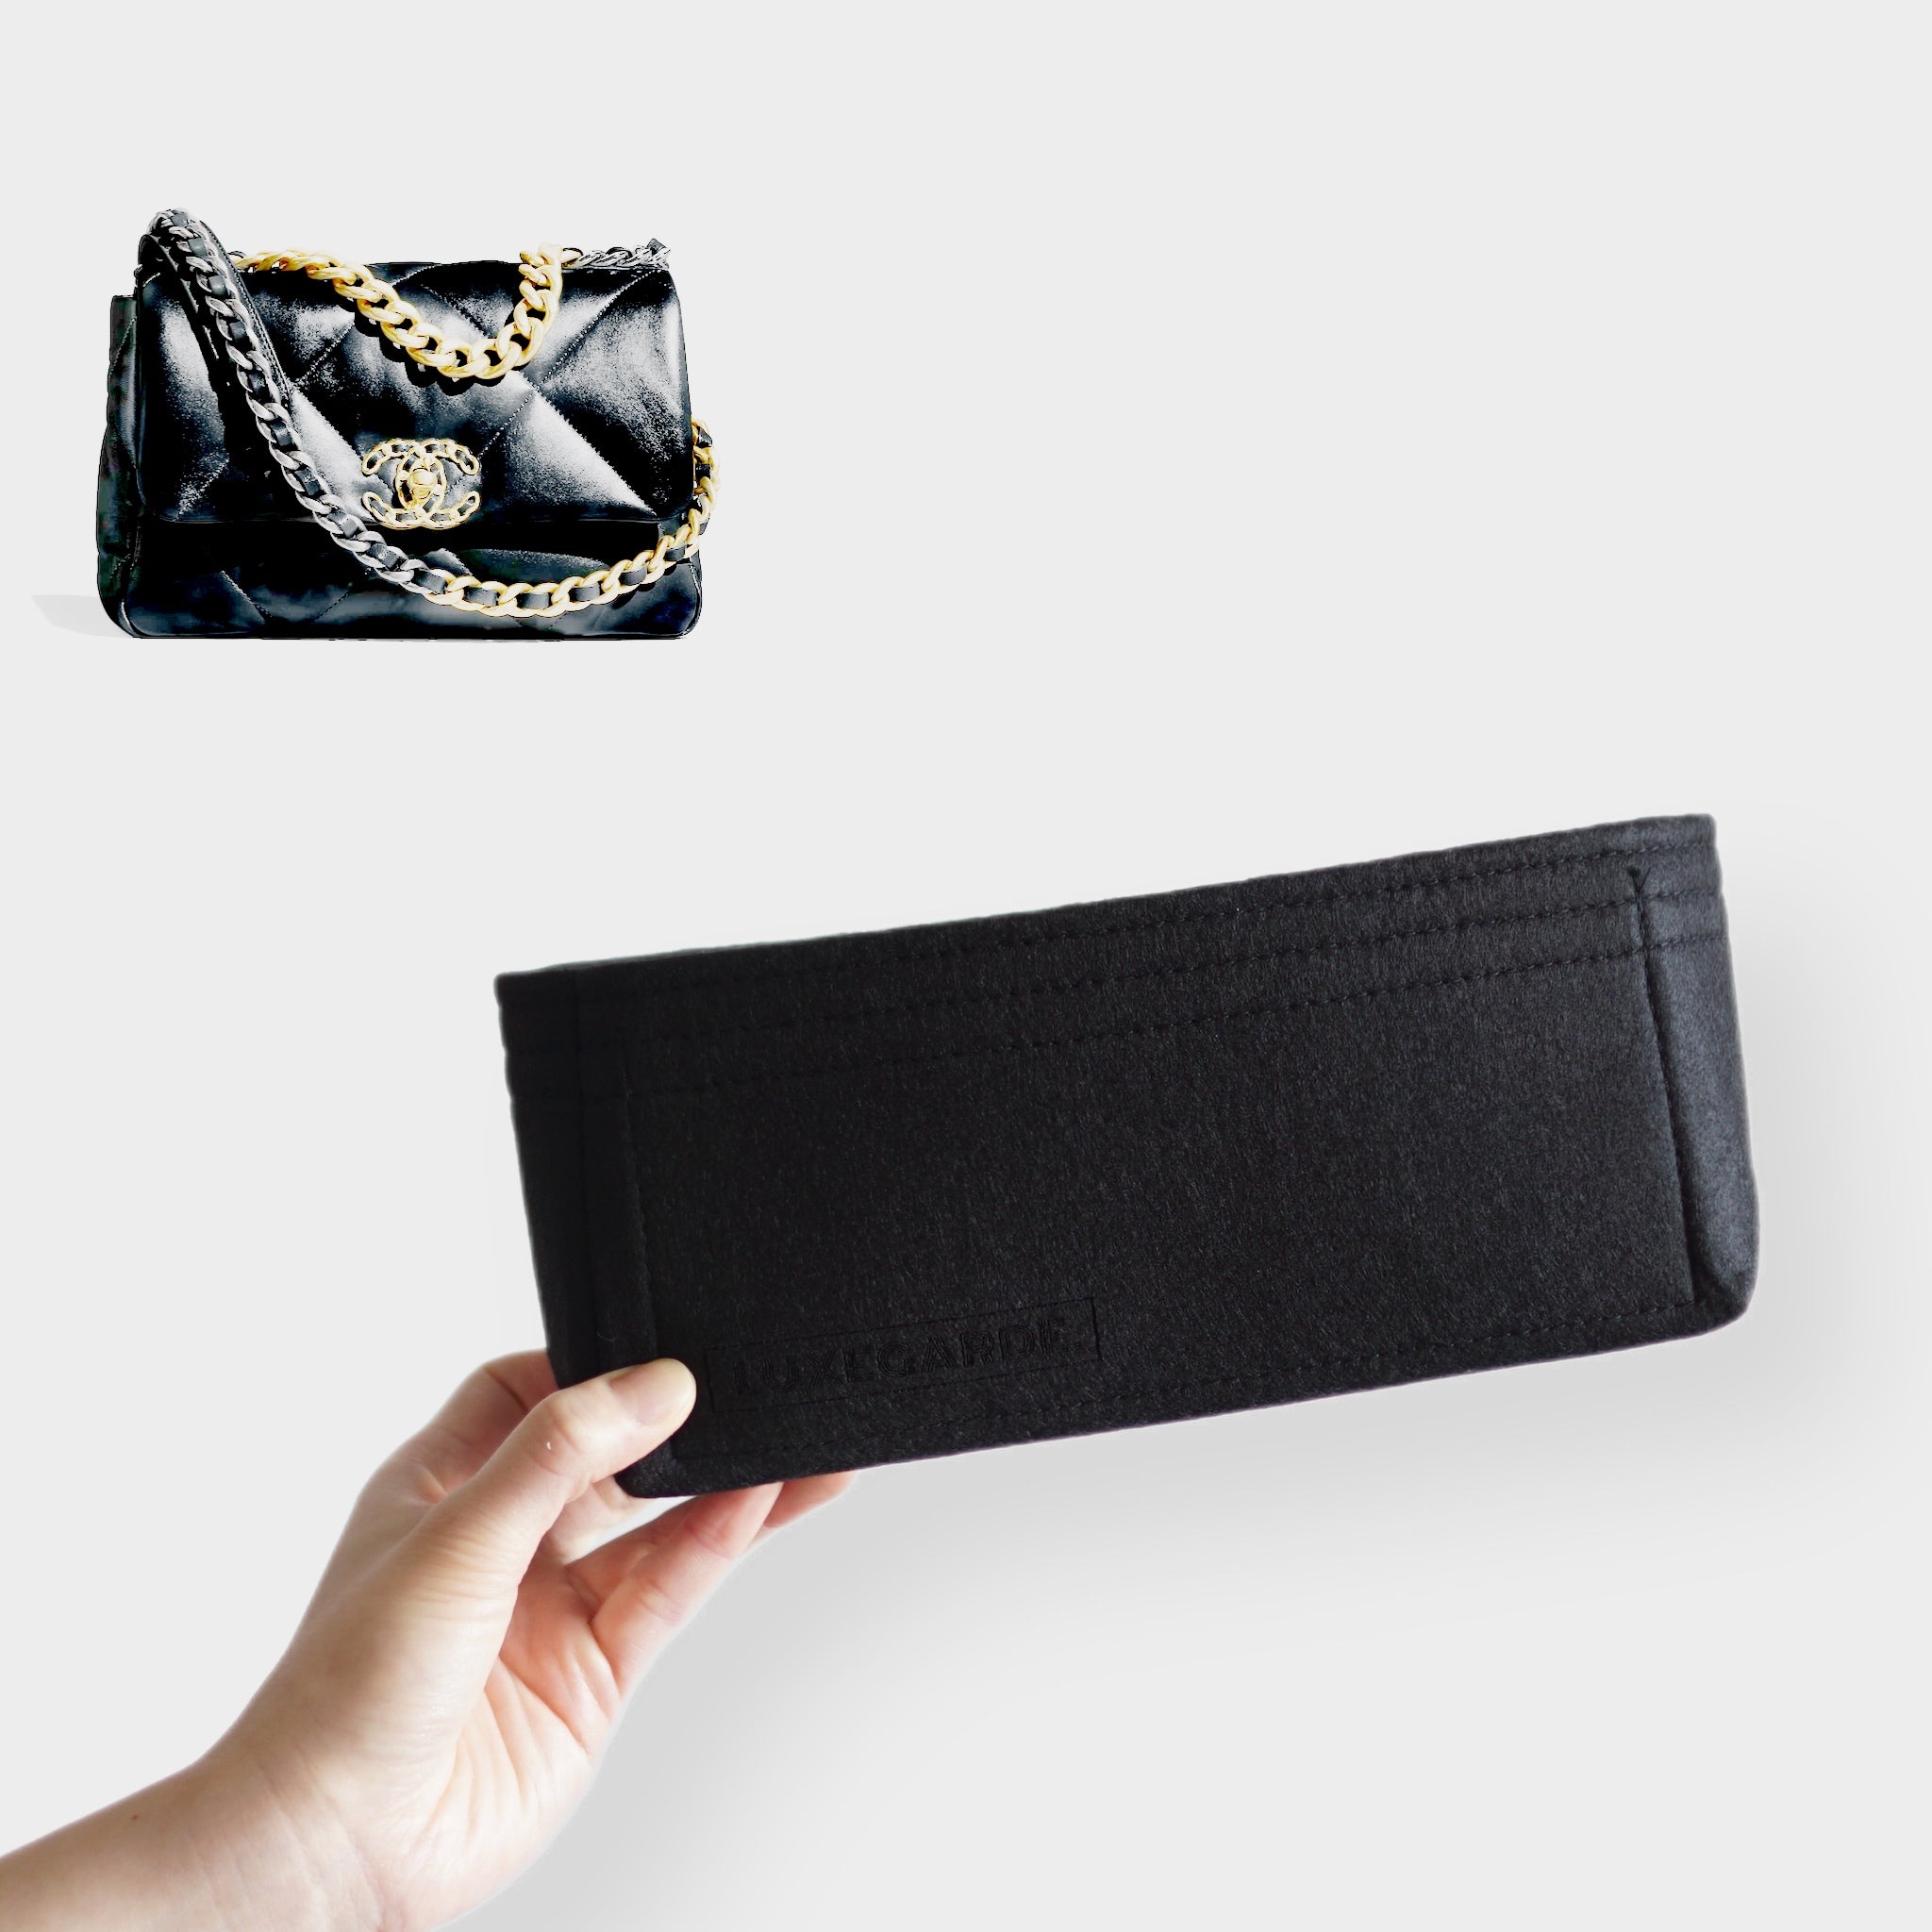 Purse Organizer Insert for Chanel 19 Large bag Organizer with Side Zipper  Pocket Claret 1016 27 * 8 * 15cm